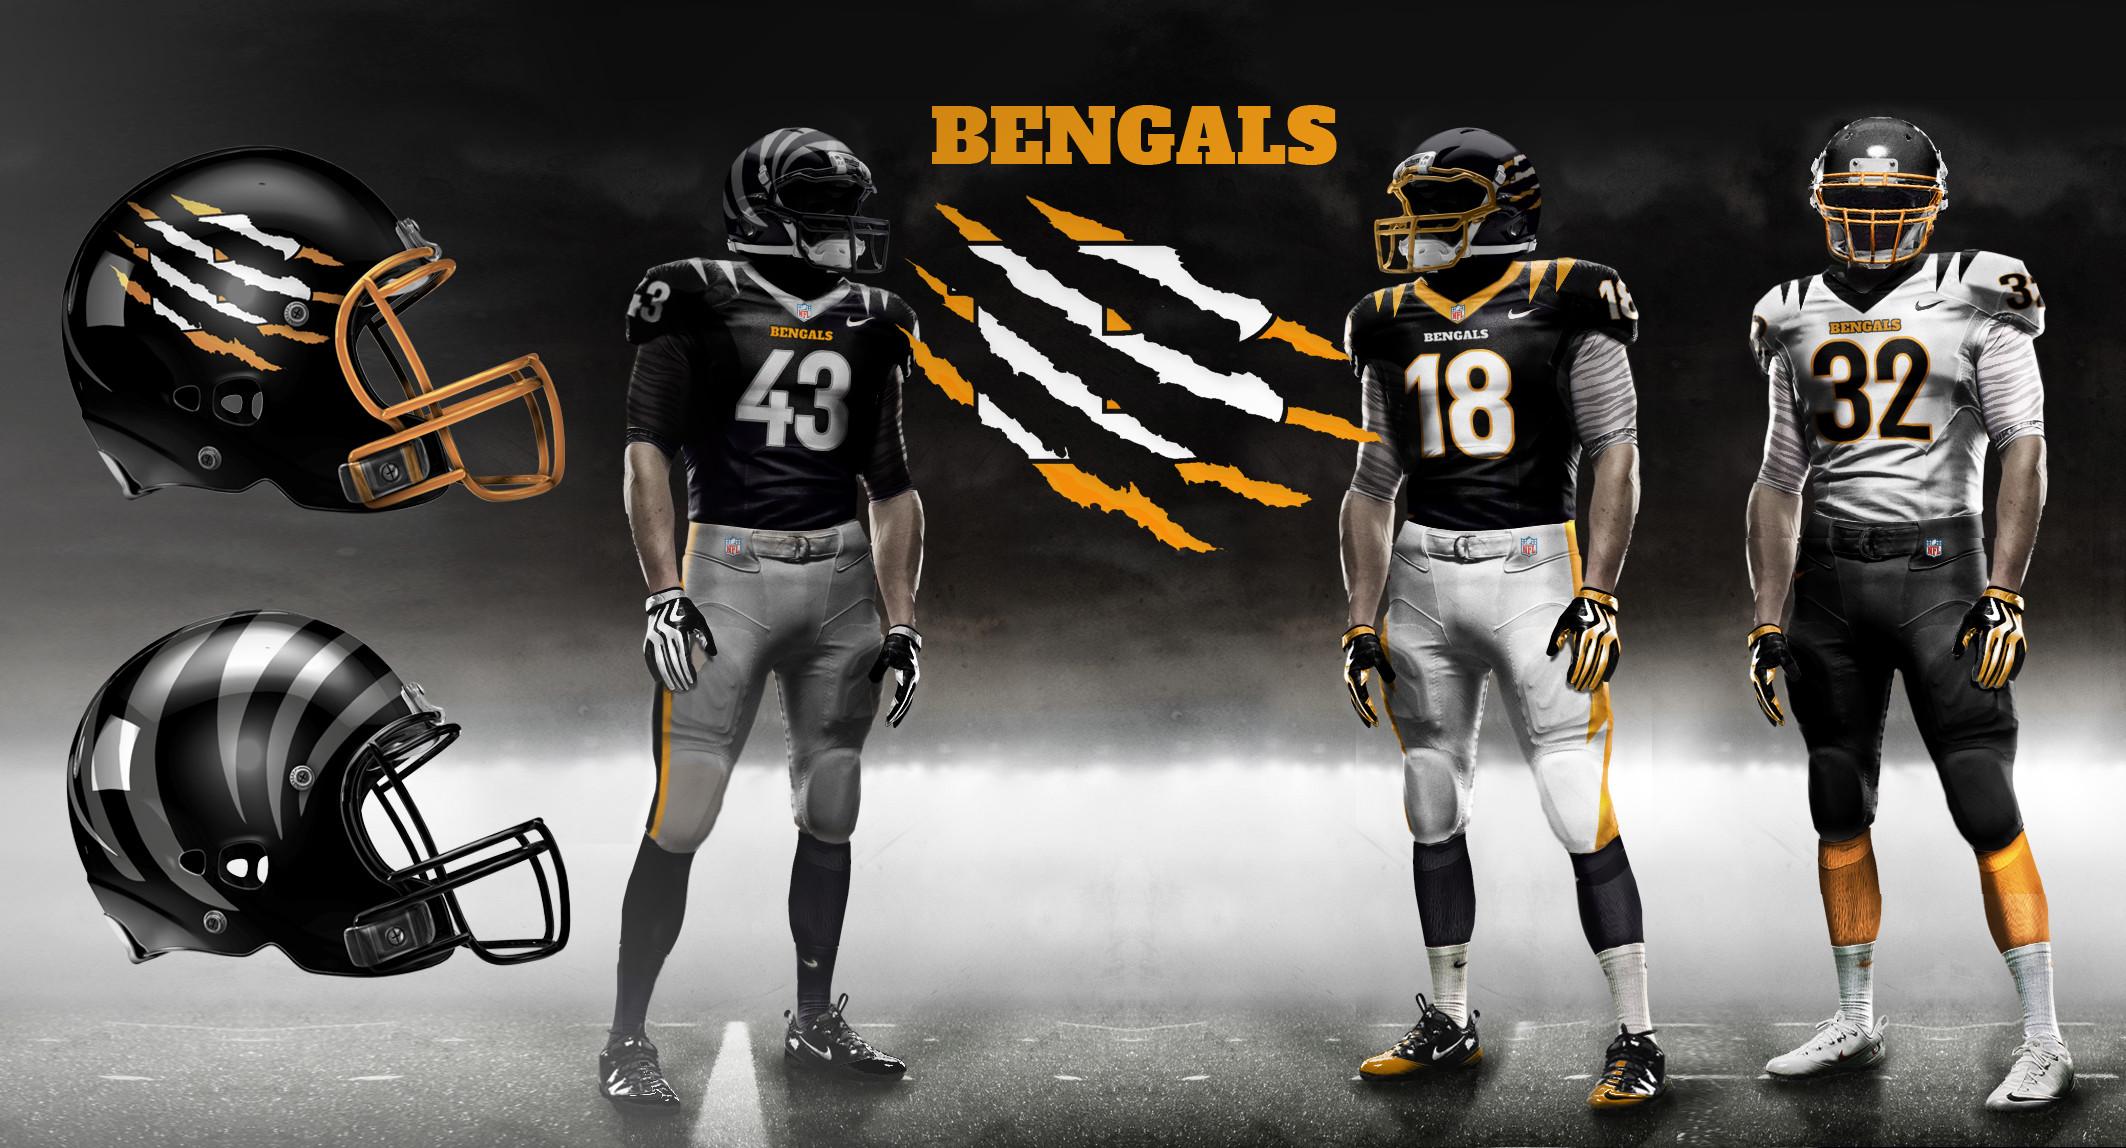 Bengals New Logo - New Bengals Helmet With New Logo; Alternate Helmet Based On Current ...